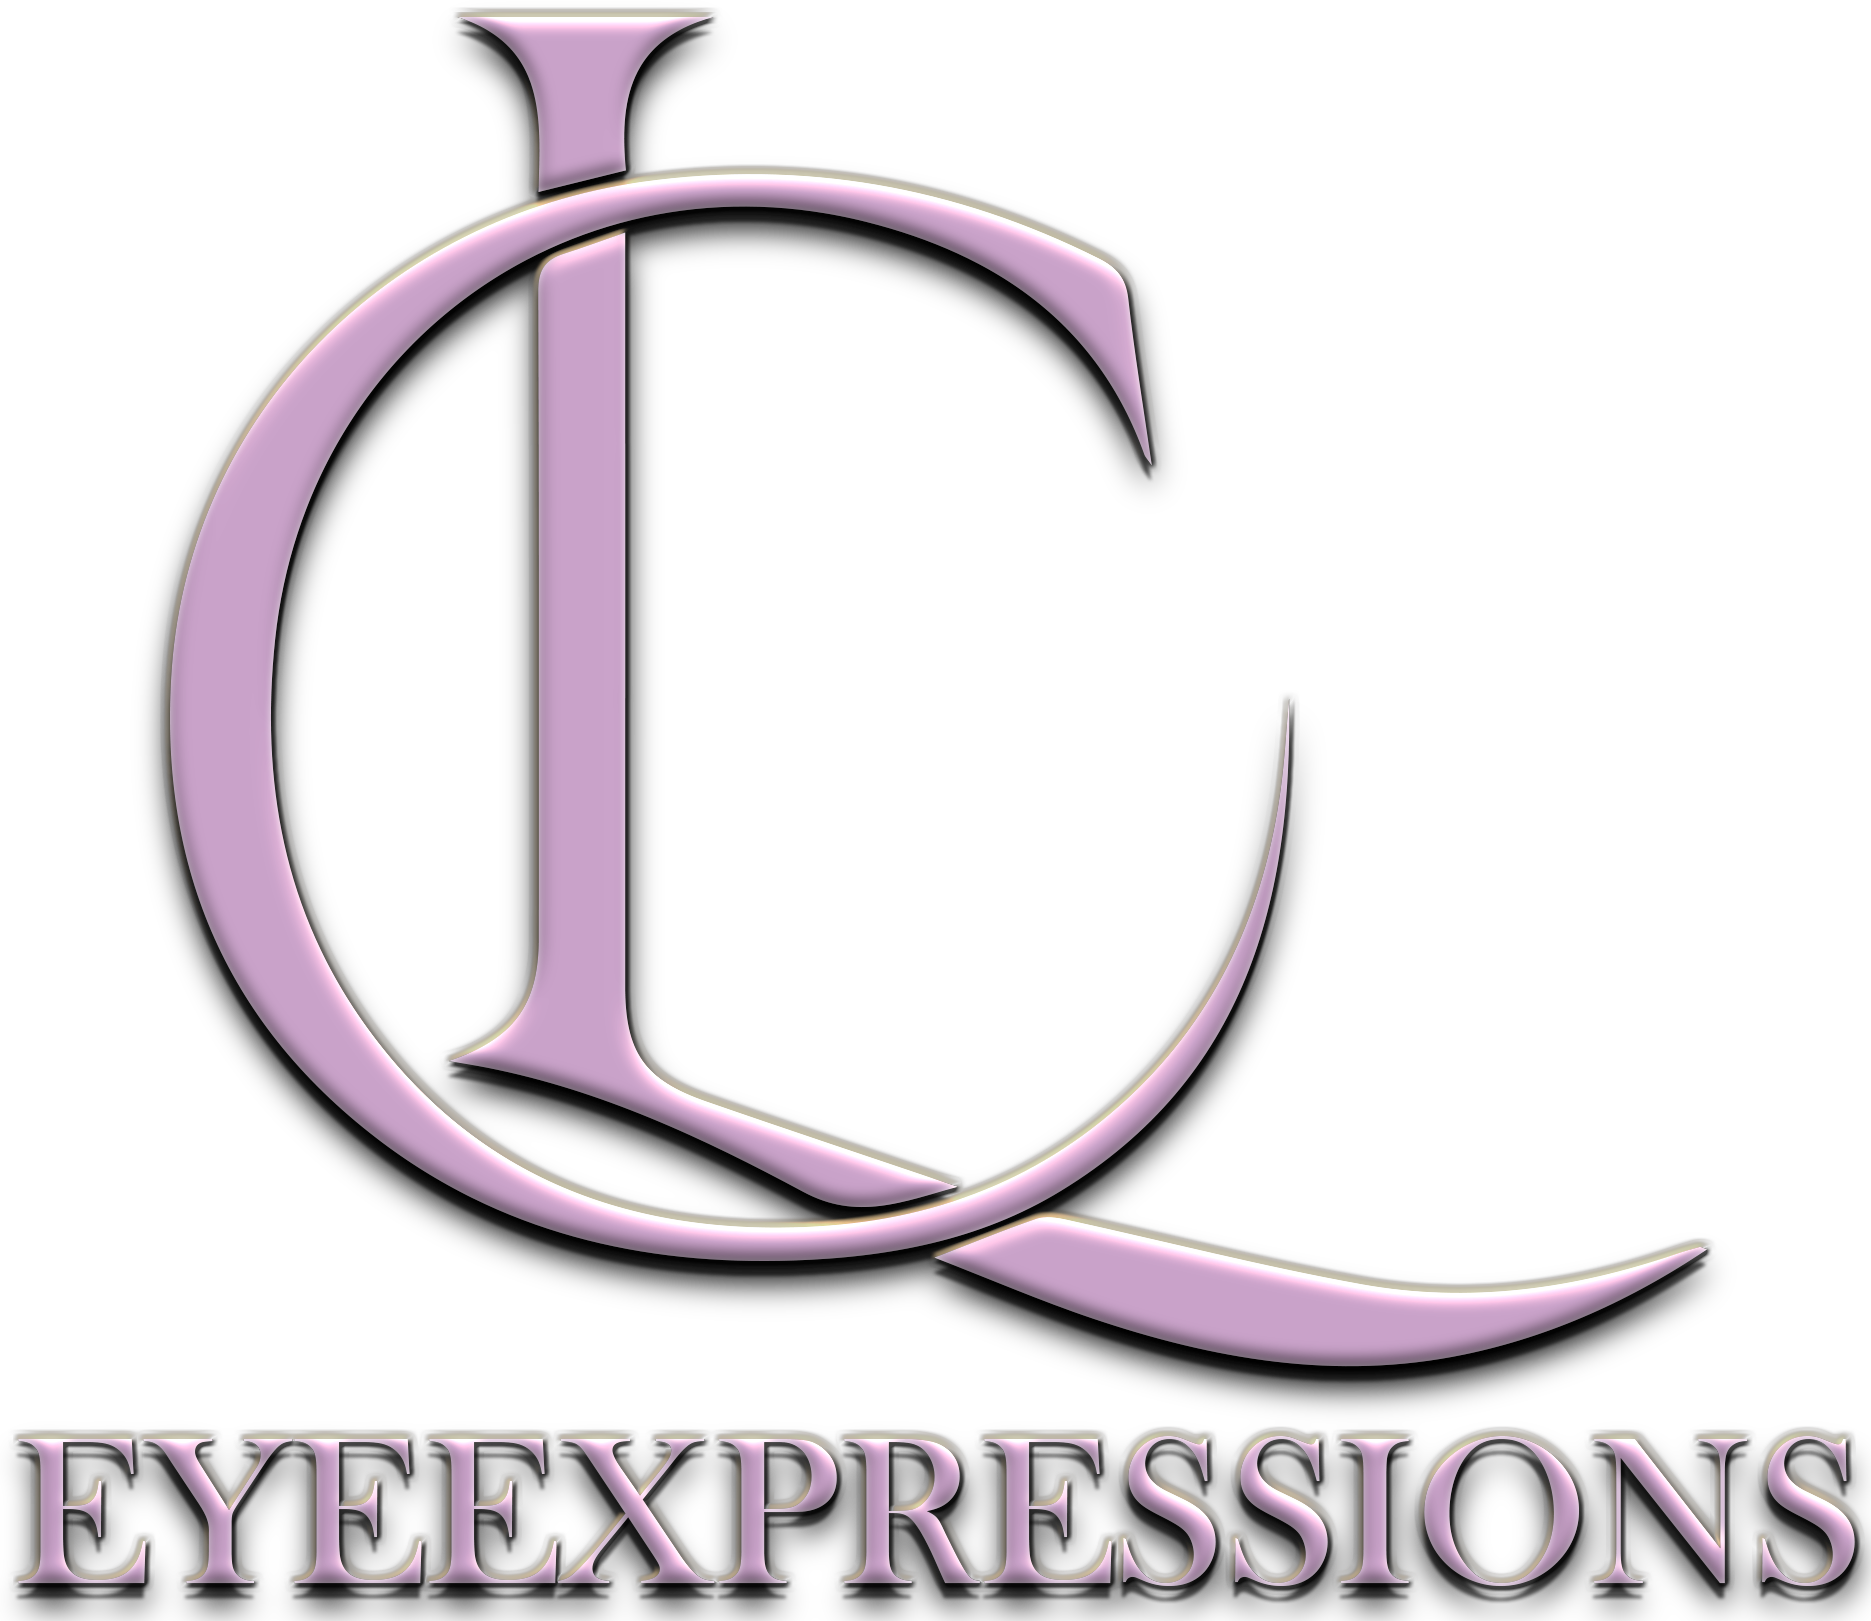 LC Eyeexpressions